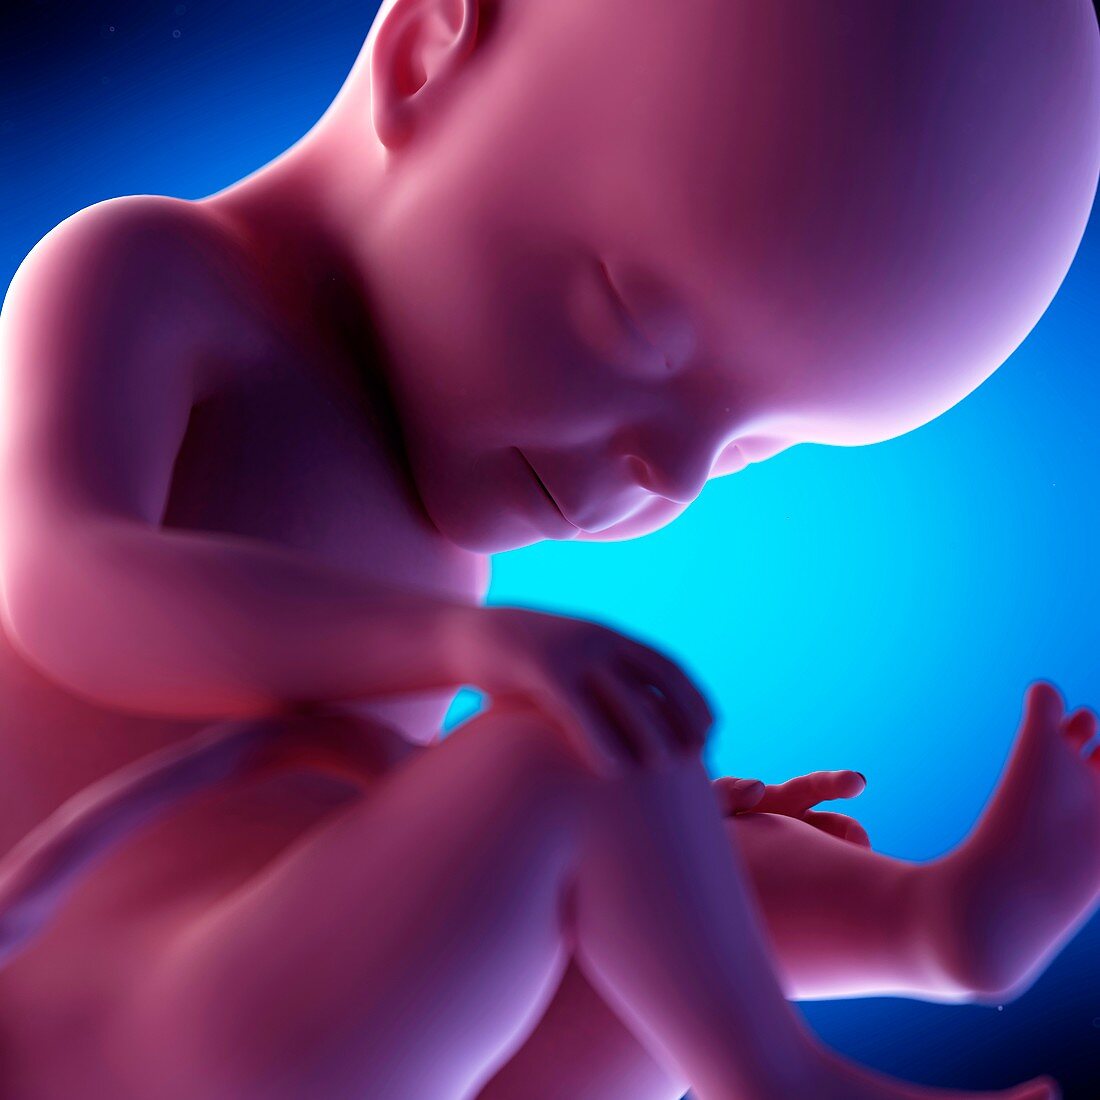 Human fetus at week 27 of gestation, illustration